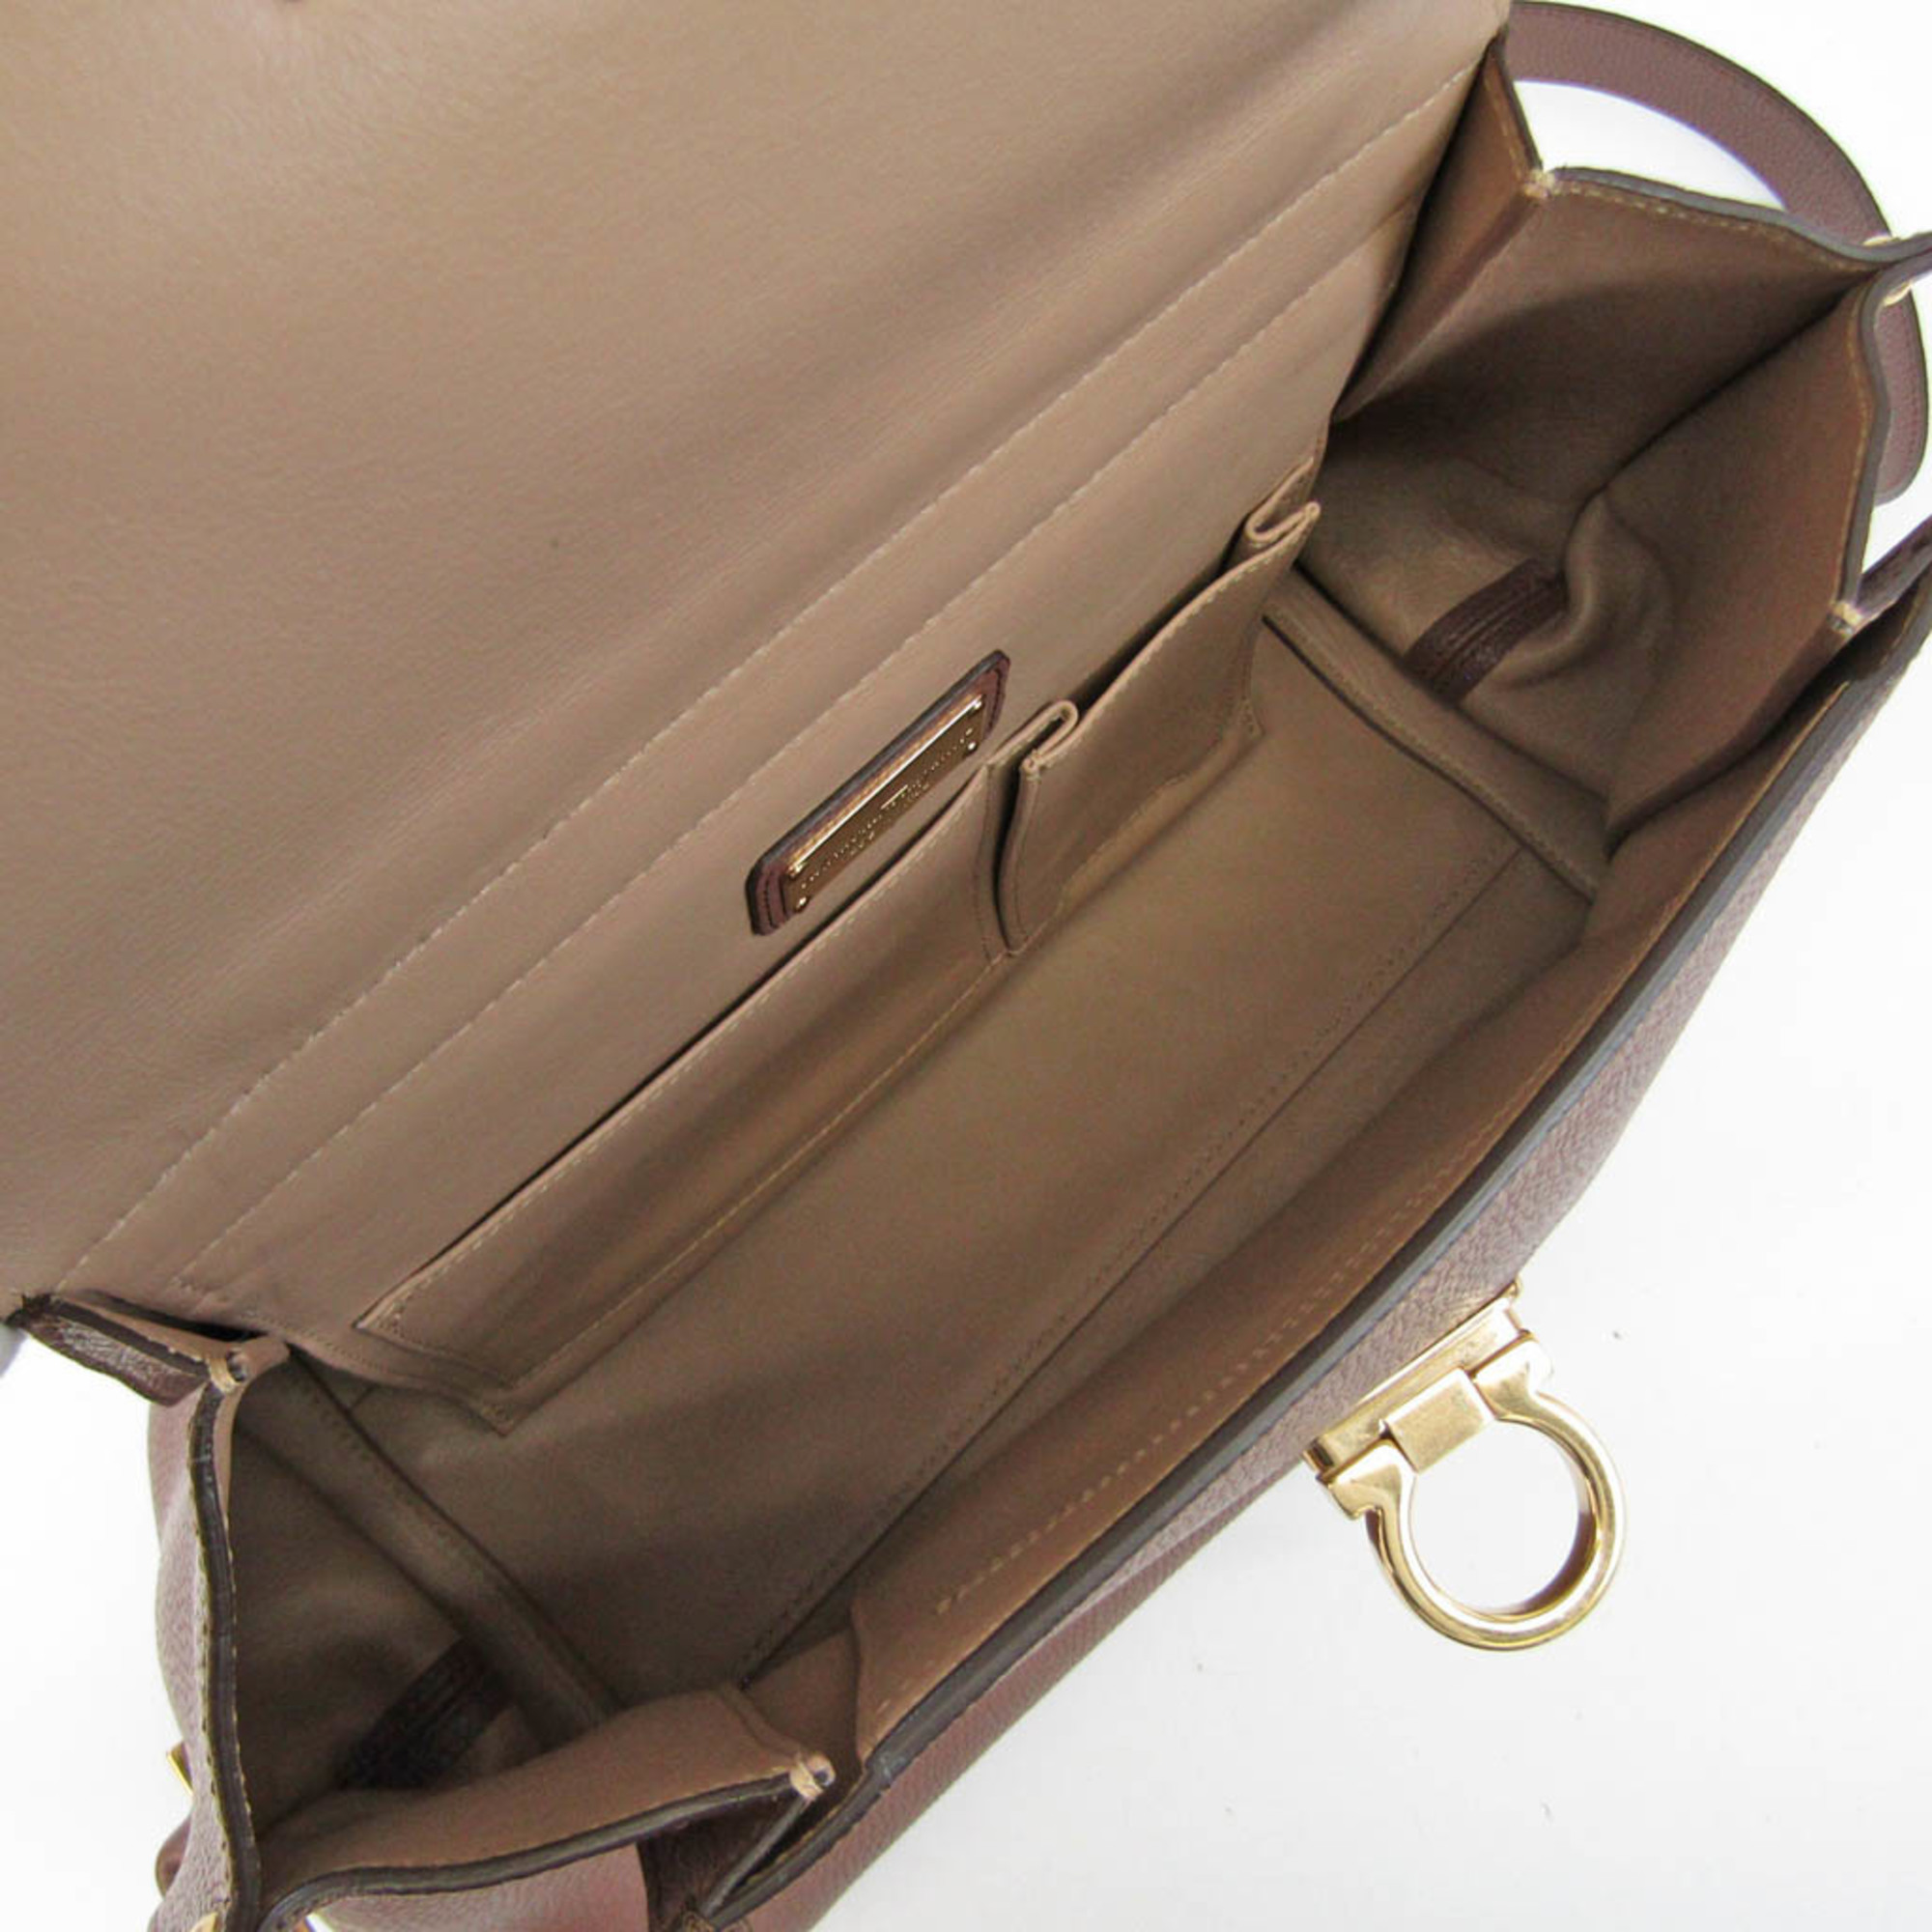 Salvatore Ferragamo Sophia DH-21 F606 Women's Leather Handbag,Shoulder Bag Cocoa